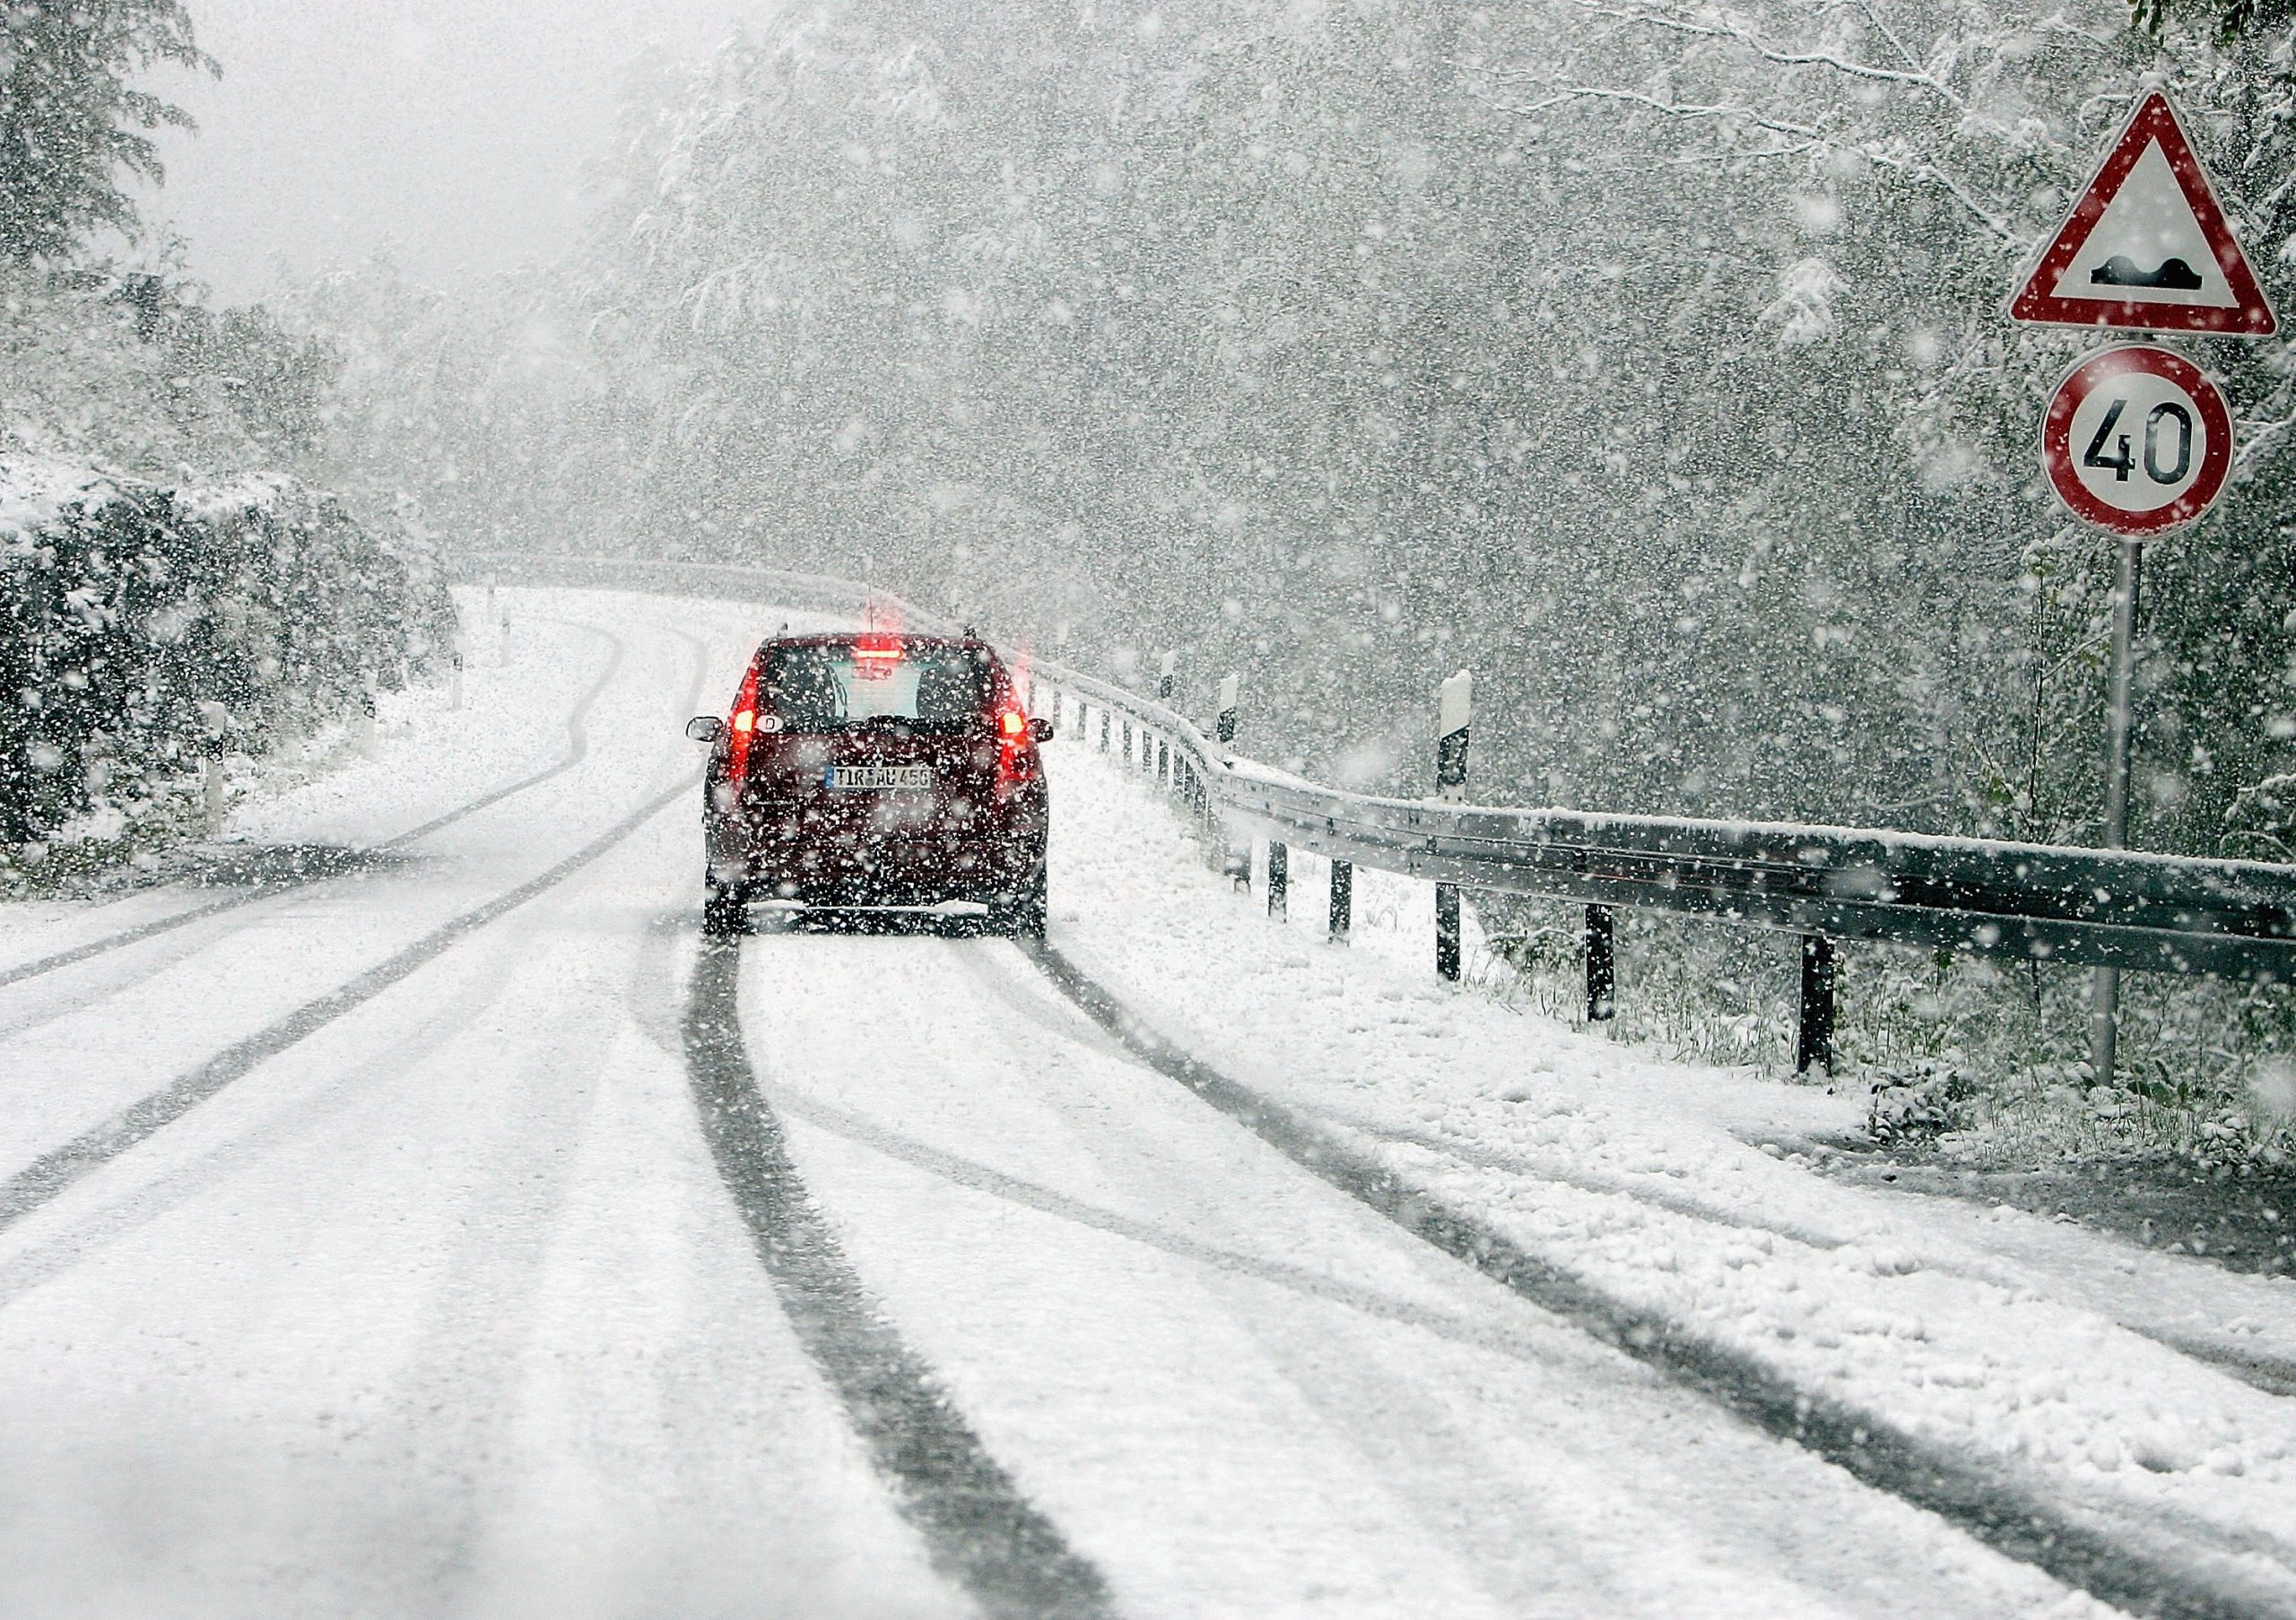 Winter Driving 101: A car drives down a snowy road